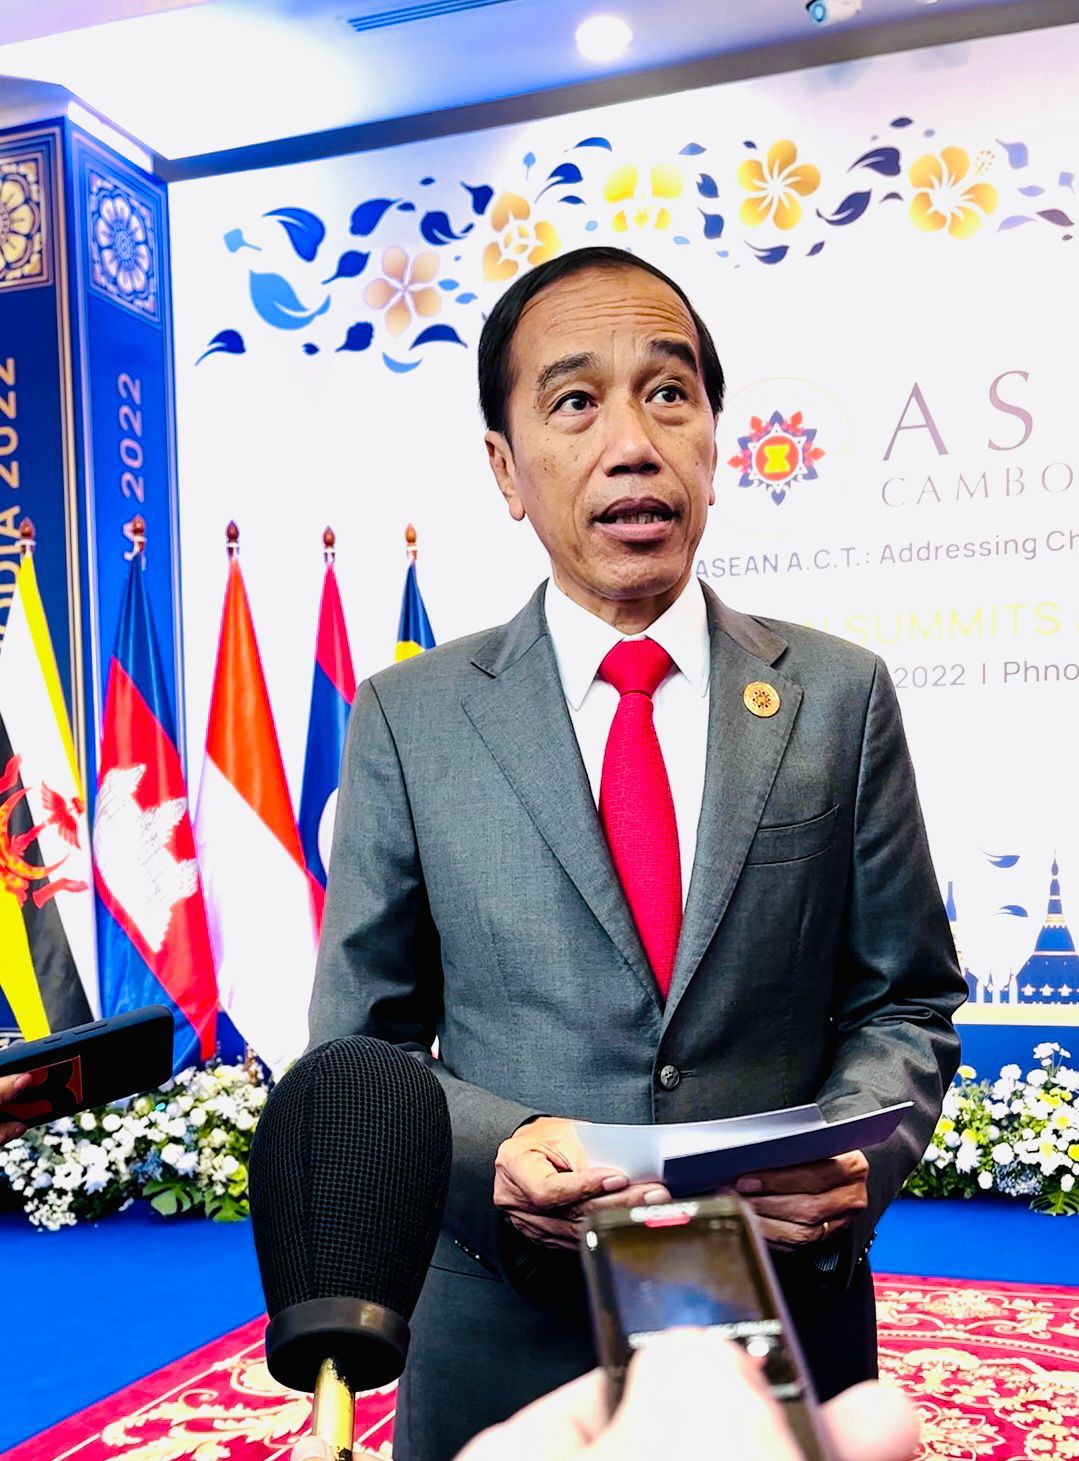 Presiden Jokowi Sampaikan Sejumlah Poin Penting Terkait Isu Myanmar